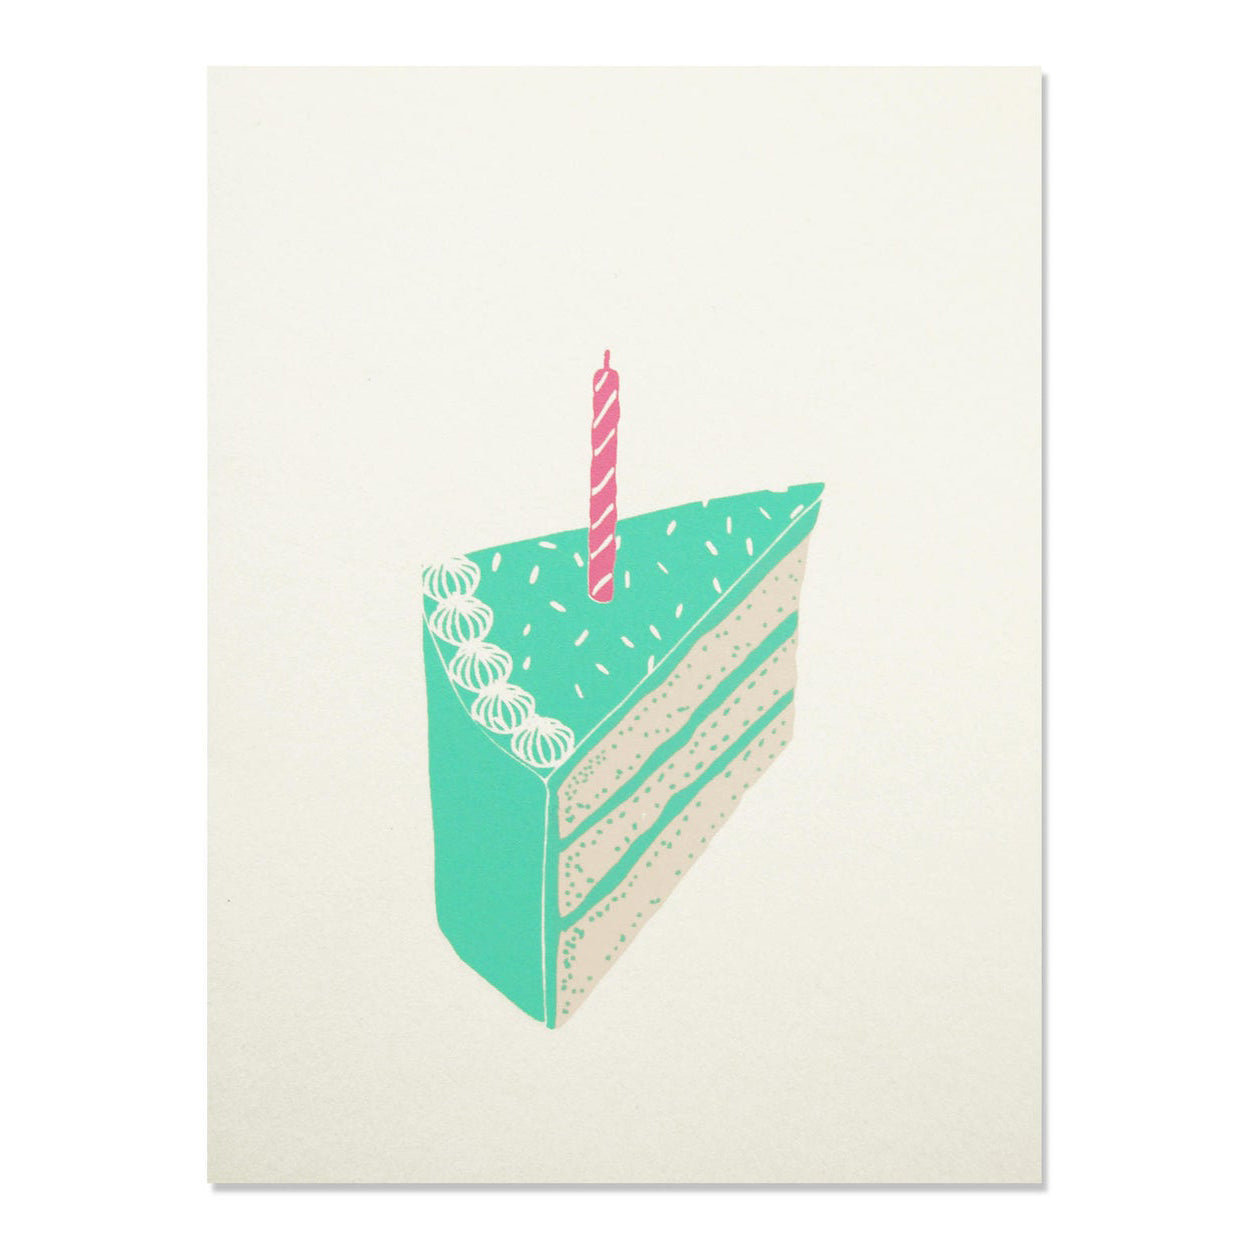 Birthday Cake Slice Card